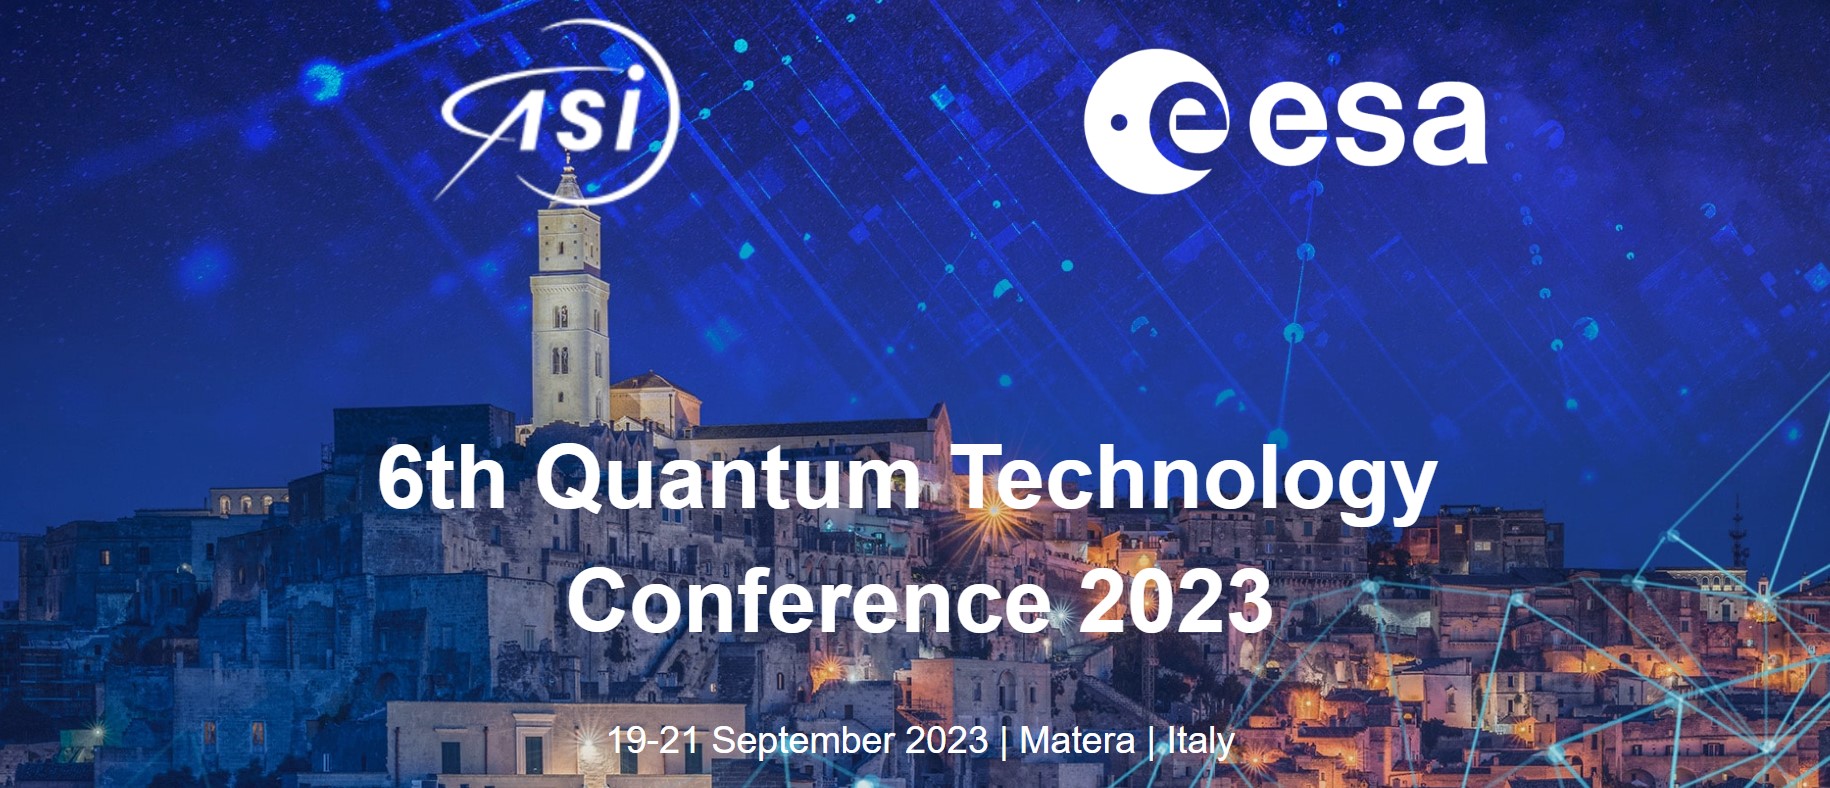 ESA Quantum Technology Conference 2023